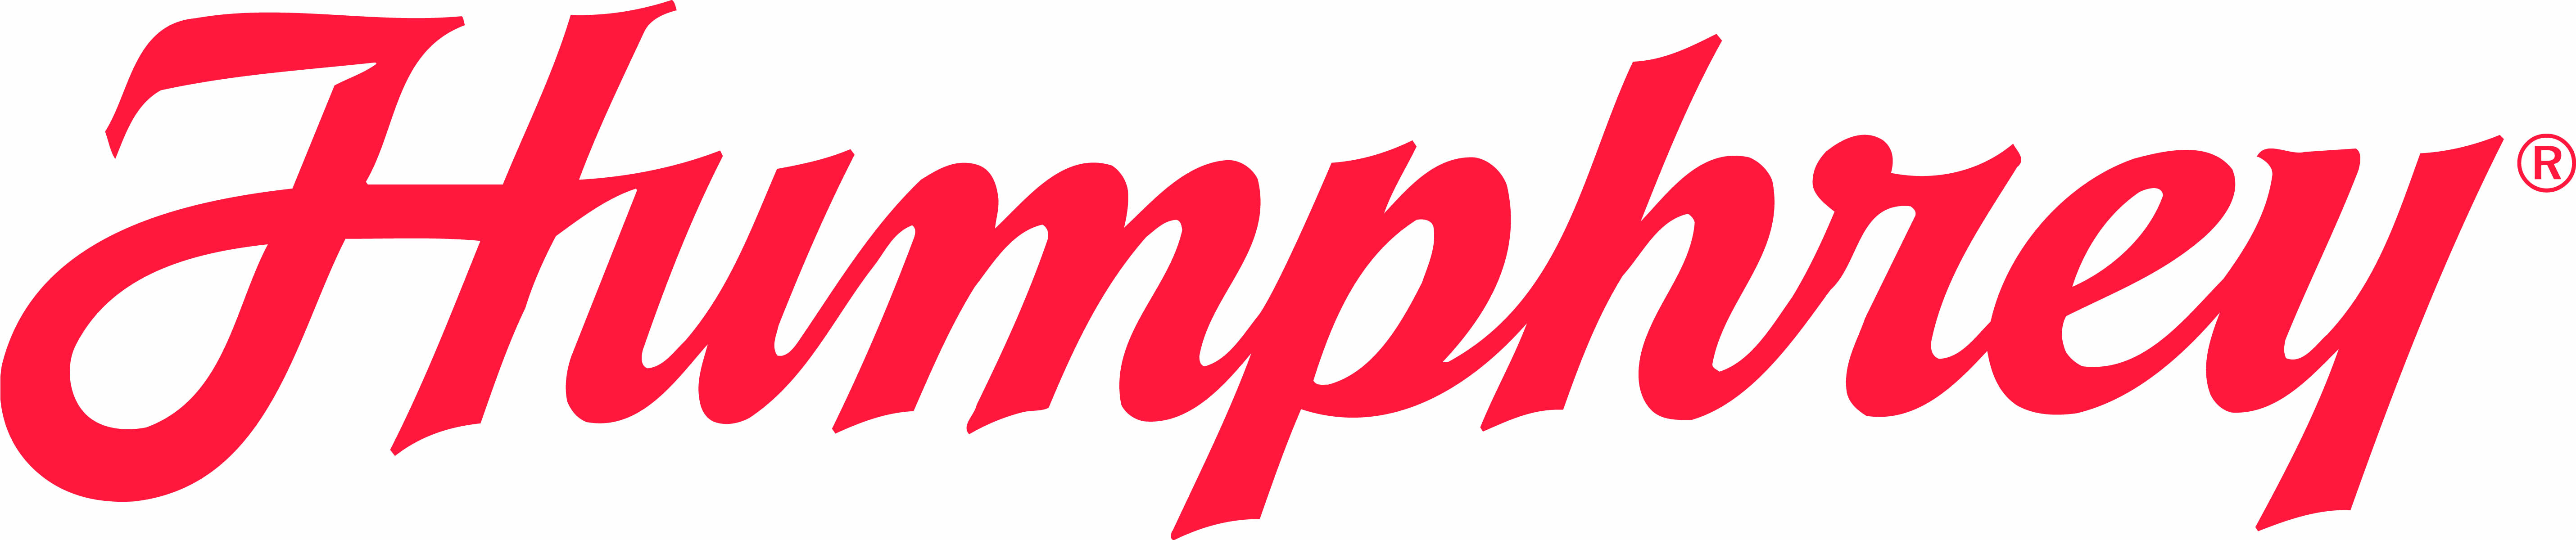 HUMPHREY PRODUCTS CO. Logo